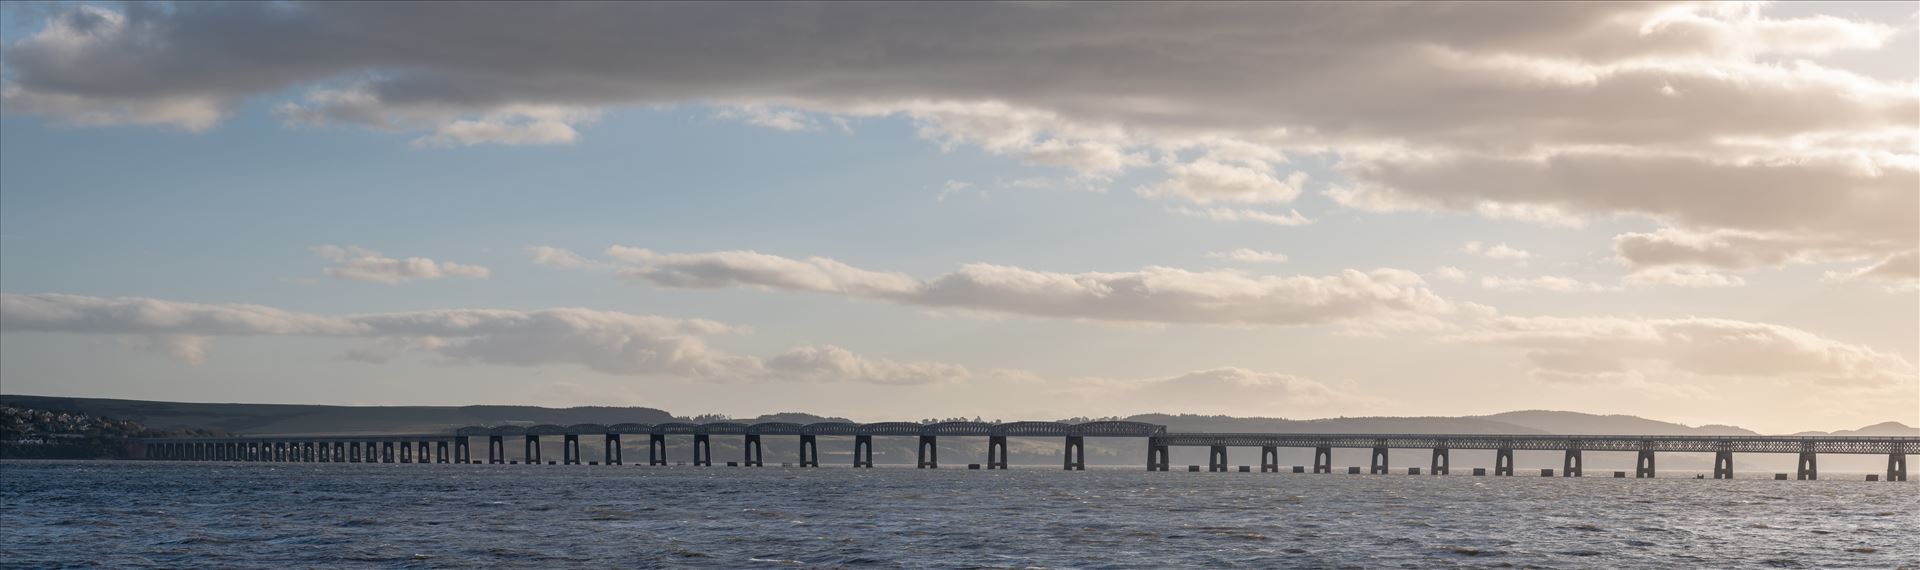 Panoramic of Tay Rail Bridge, Dundee, Scotland.  by Graham Dobson Photography